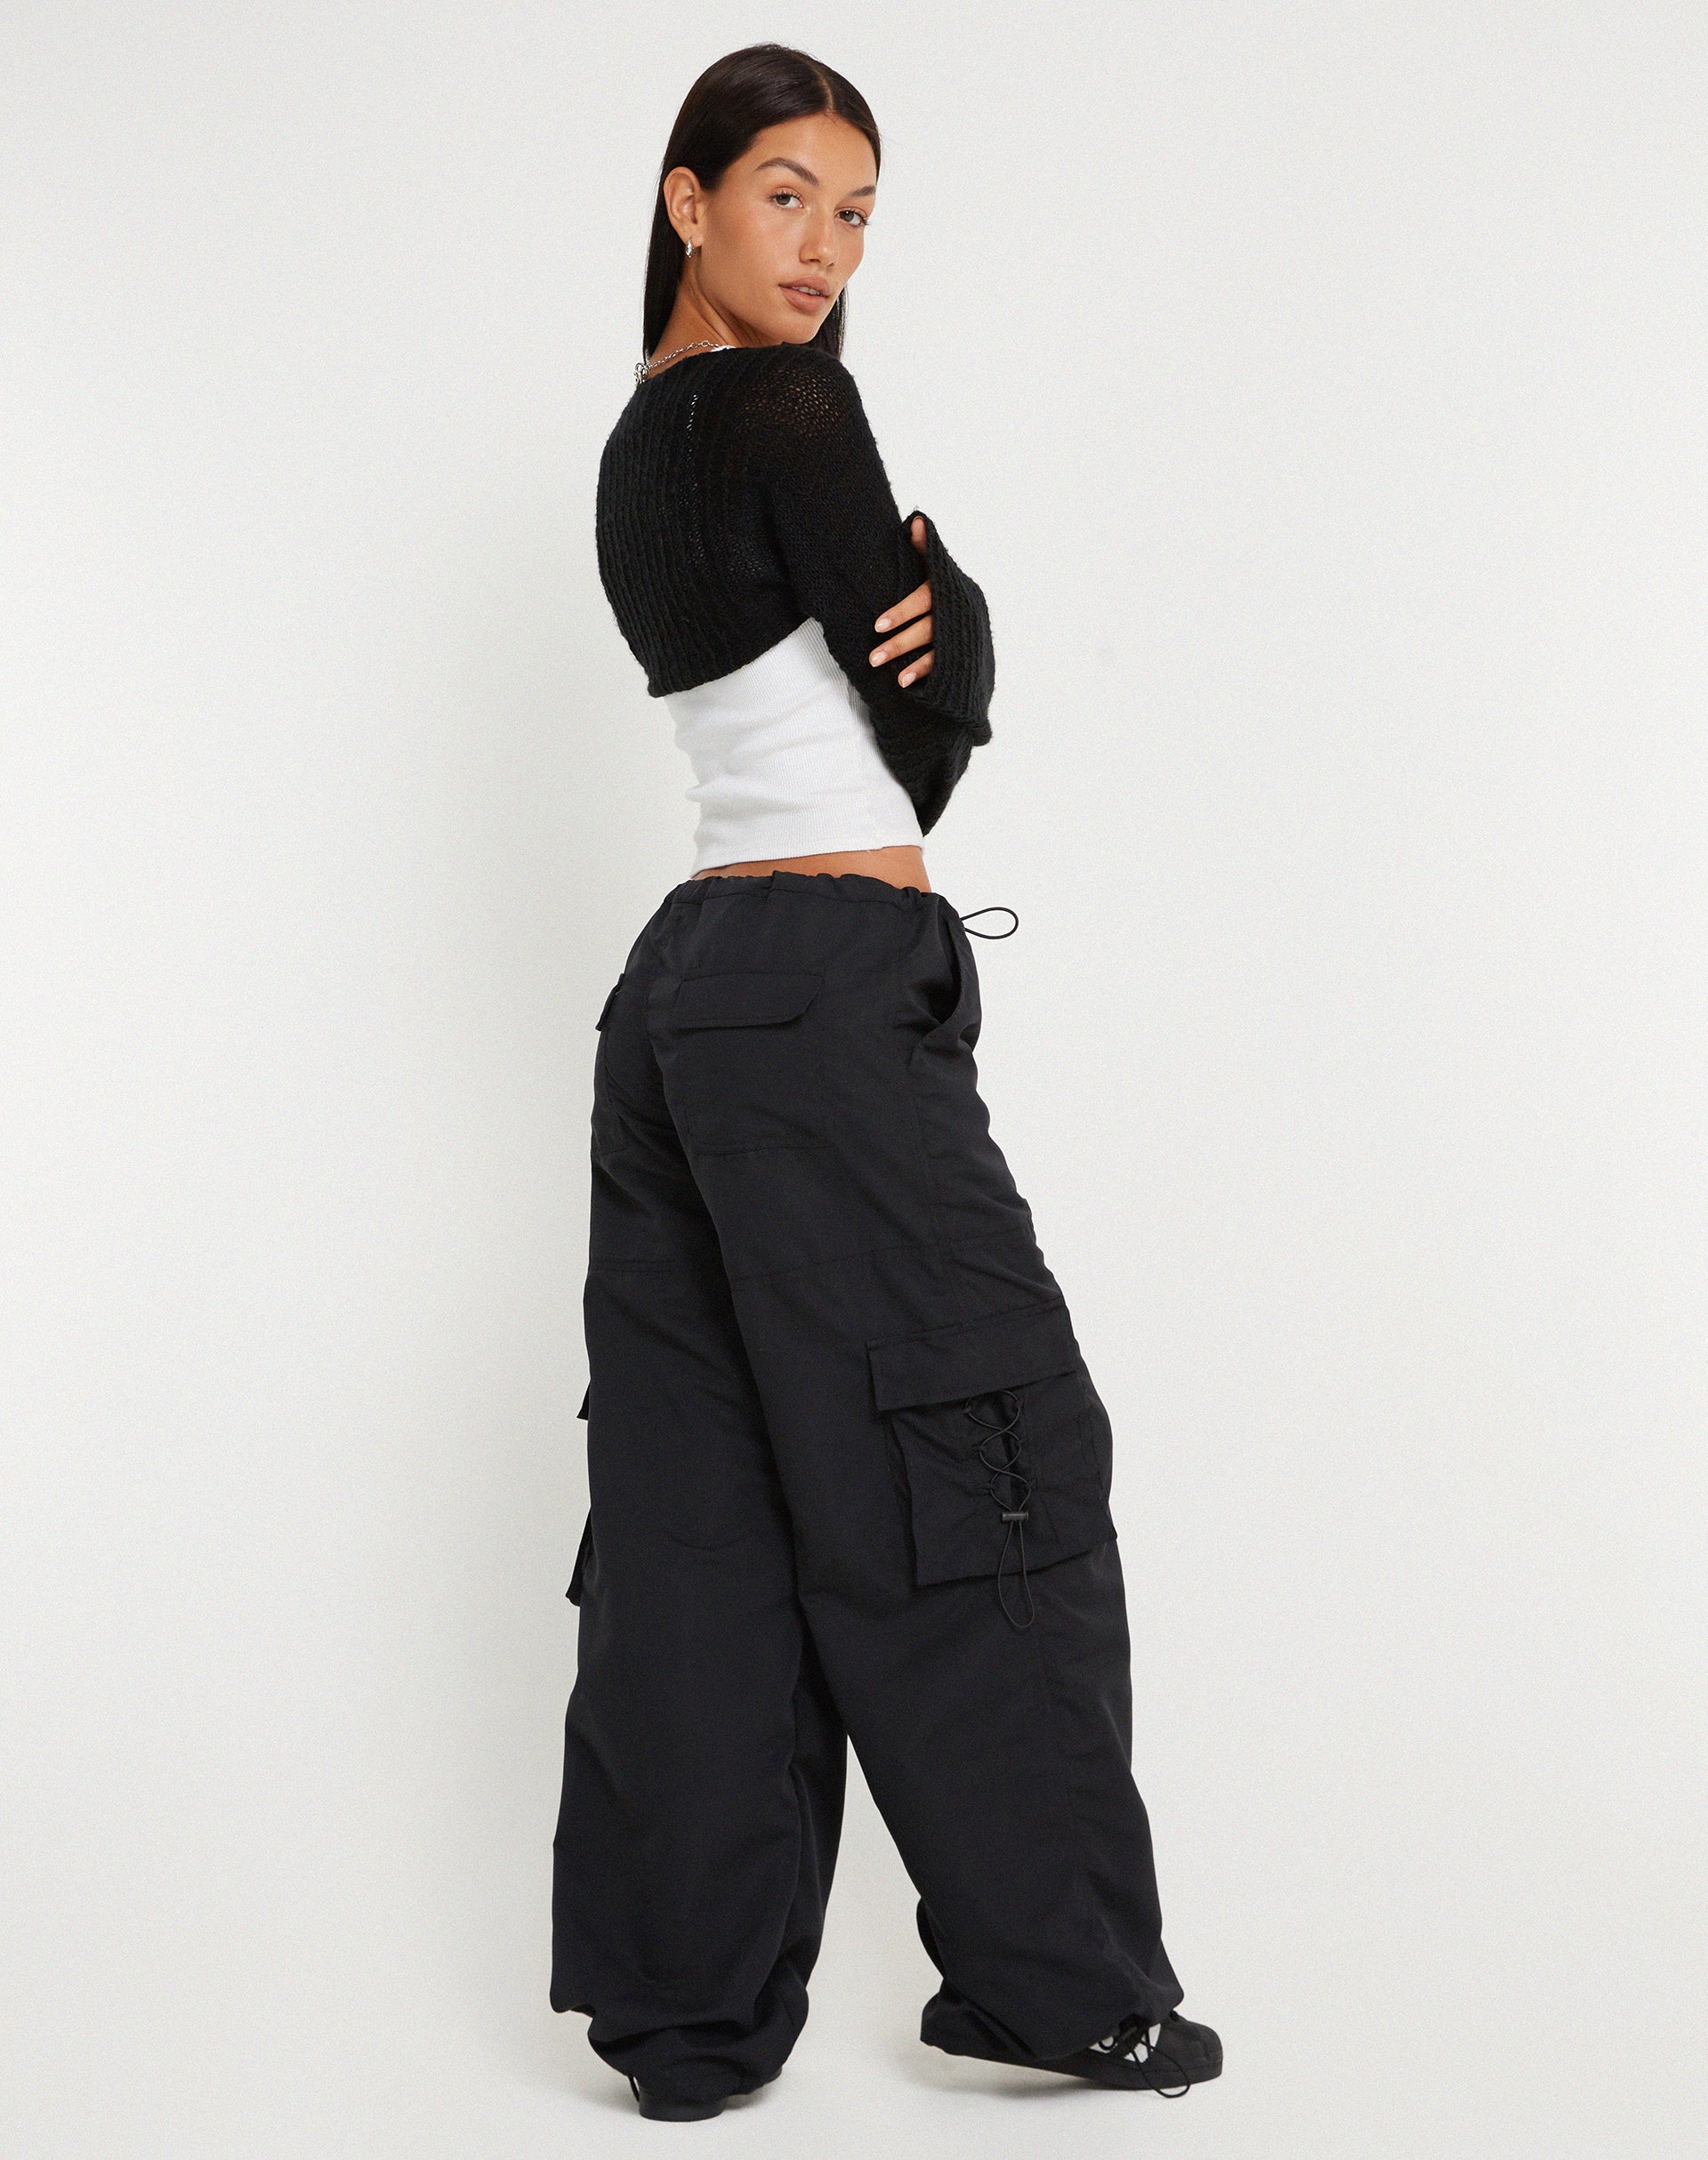 Buy AEJENNIO Womens High Waist Baggy Cargo Pants Hip Hop Loose Jogging  Sport Tapered Cargo Pants Trousers Pockets Black Medium at Amazonin